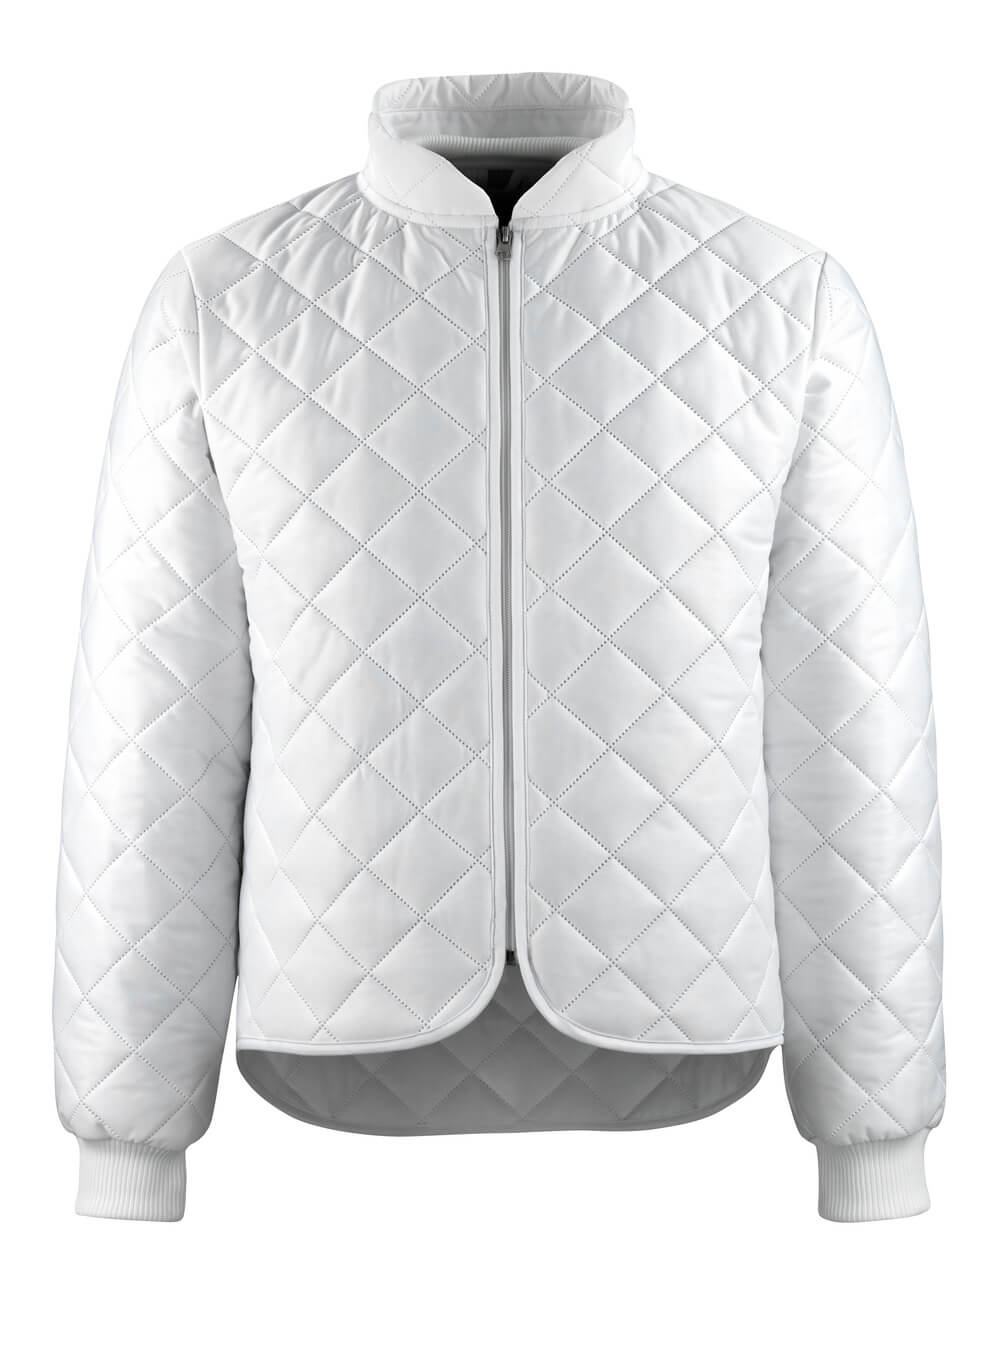 Mascot ORIGINALS  Whitby Thermal jacket 14528 white